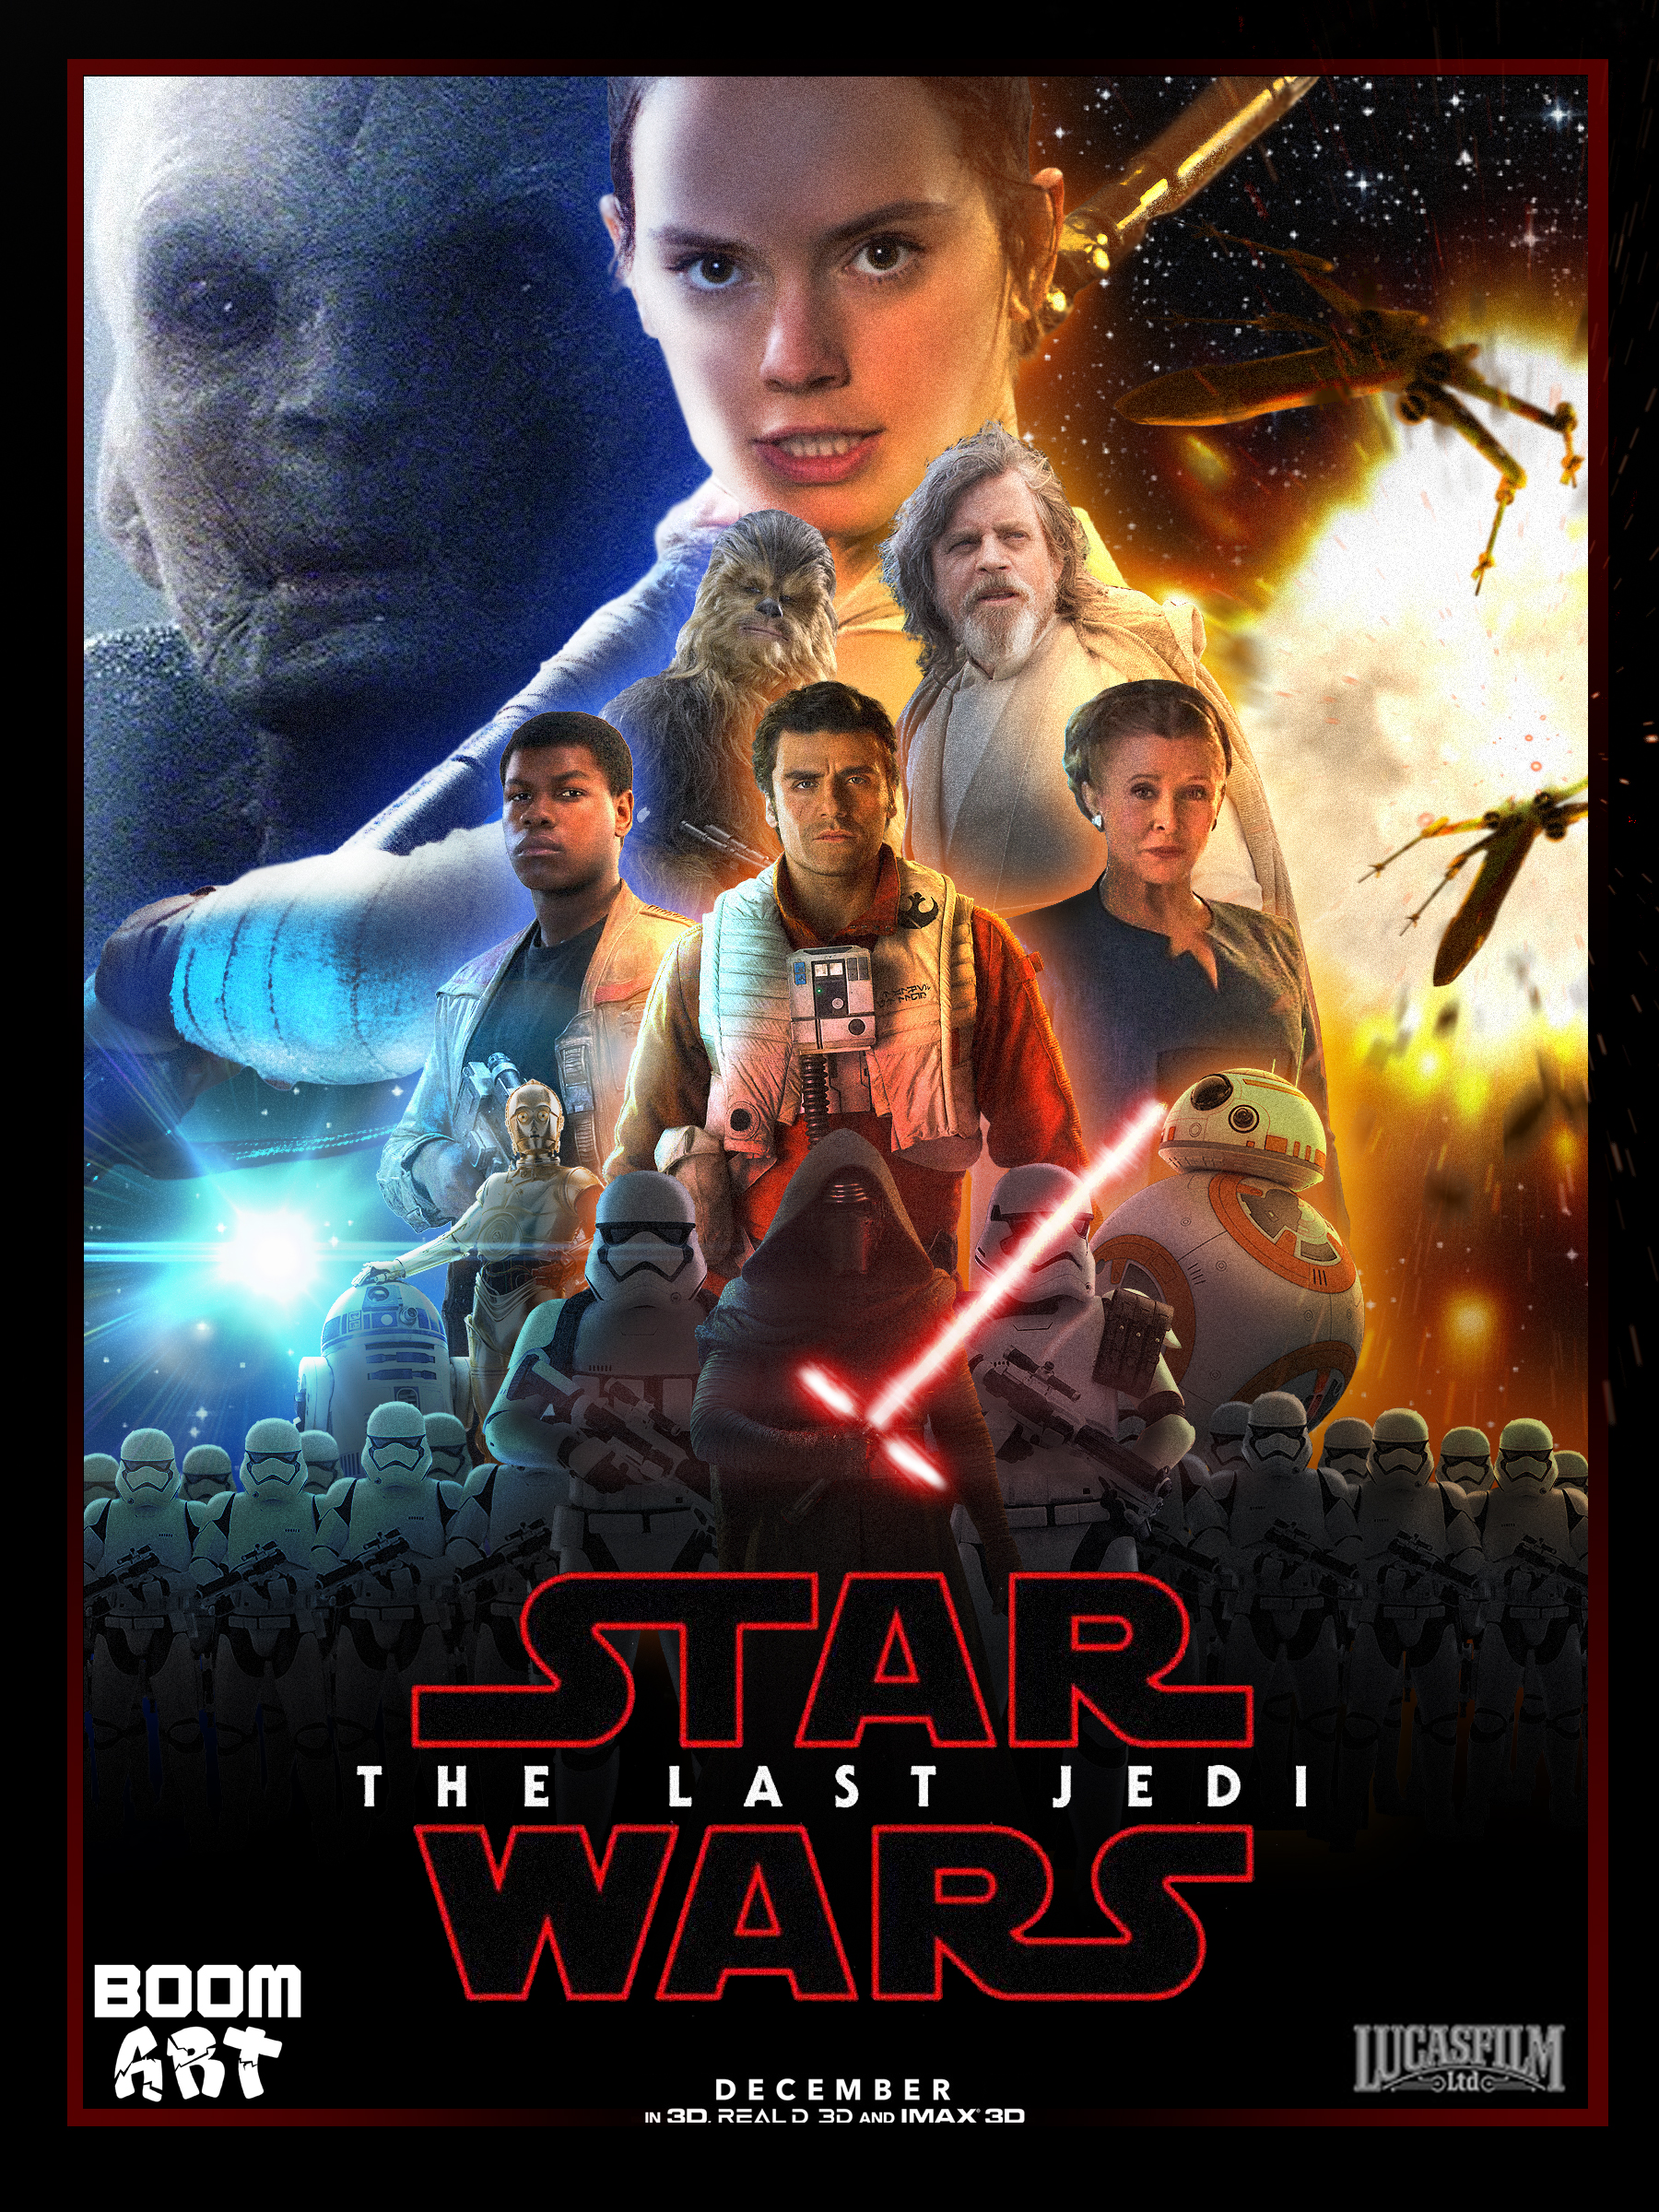 Star Wars Episode 8 – The Last Jedi: trailer, release date, posters